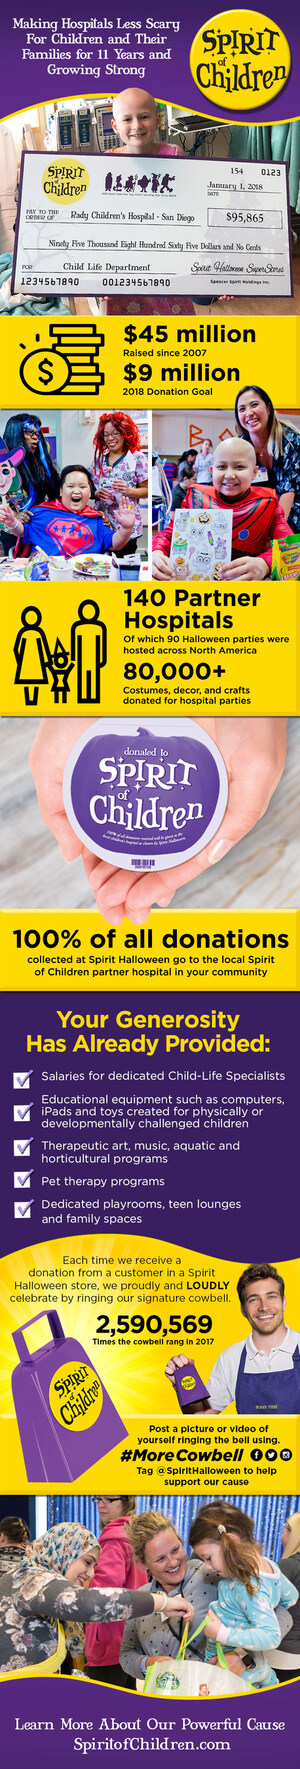 Spirit Halloween Makes Hospitals 'Less Scary' for kids' With Annual Spirit of Children Program